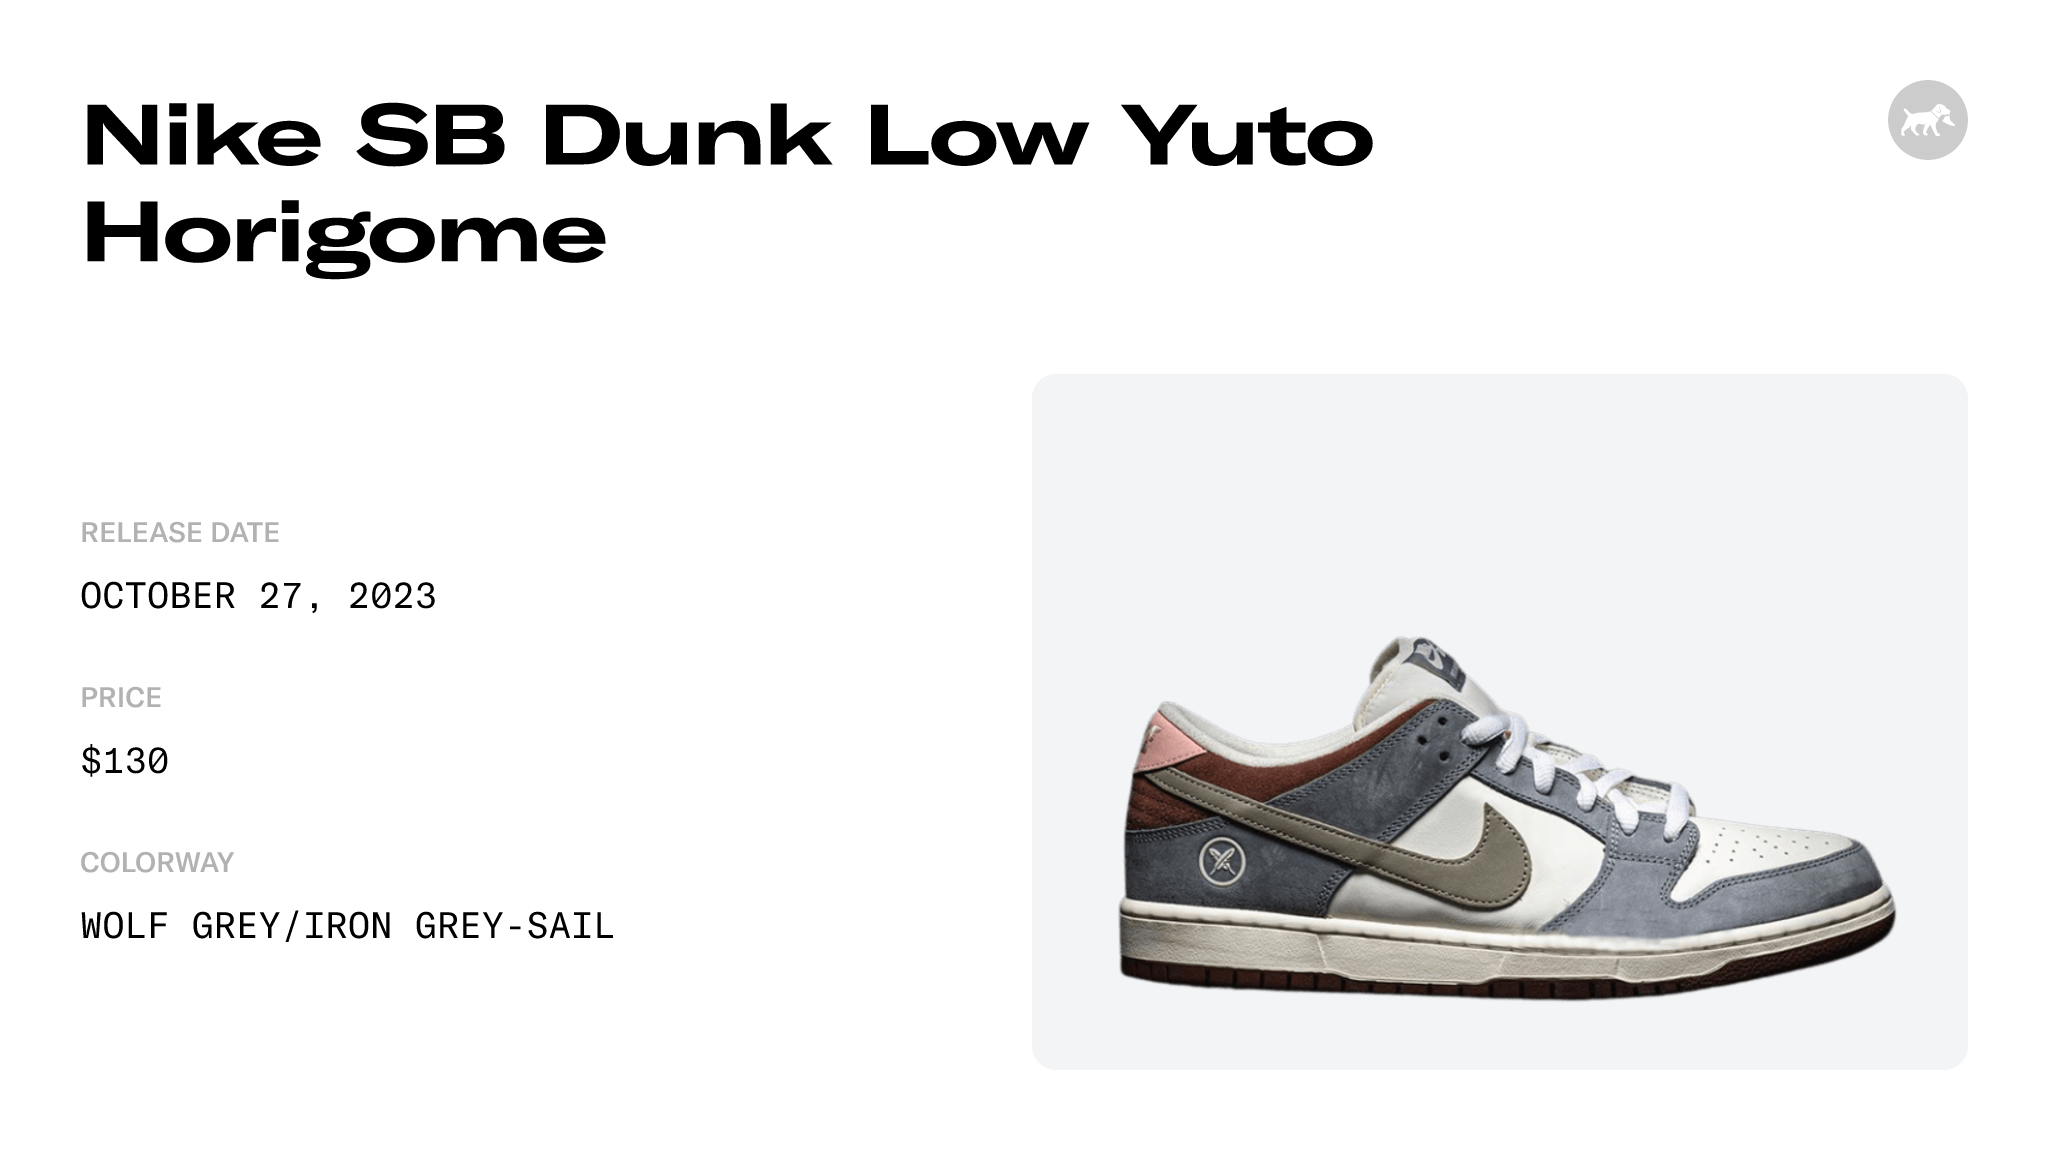 Nike SB x Yuto Horigome Dunk Low Sneaker Releases This Week